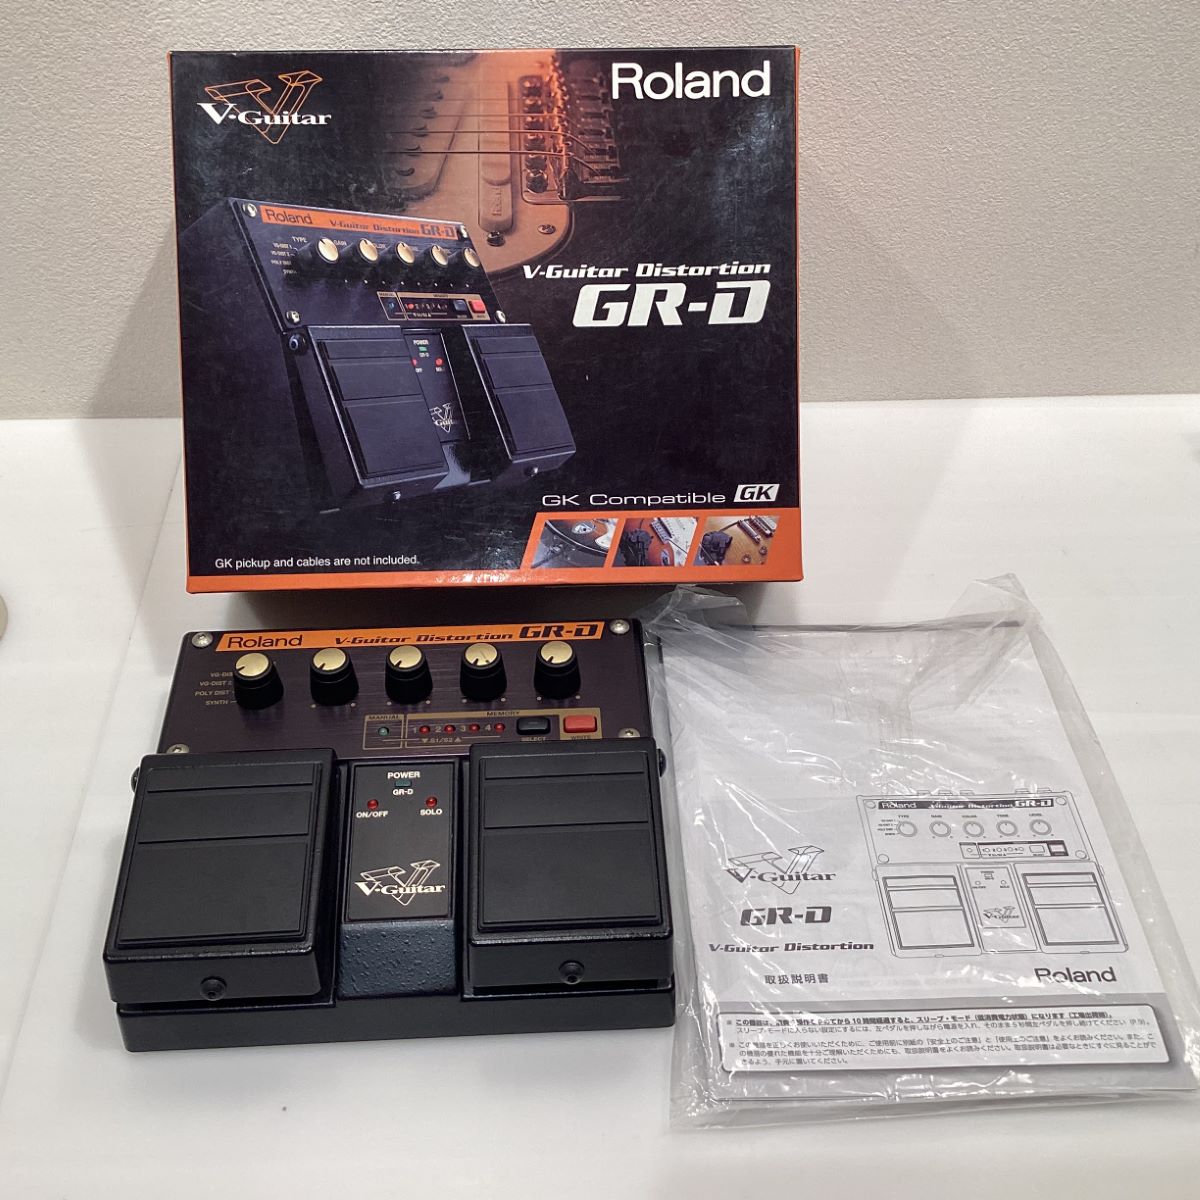 Roland GR-D V-Guitar Distortion GKピックアップ専用の新感覚